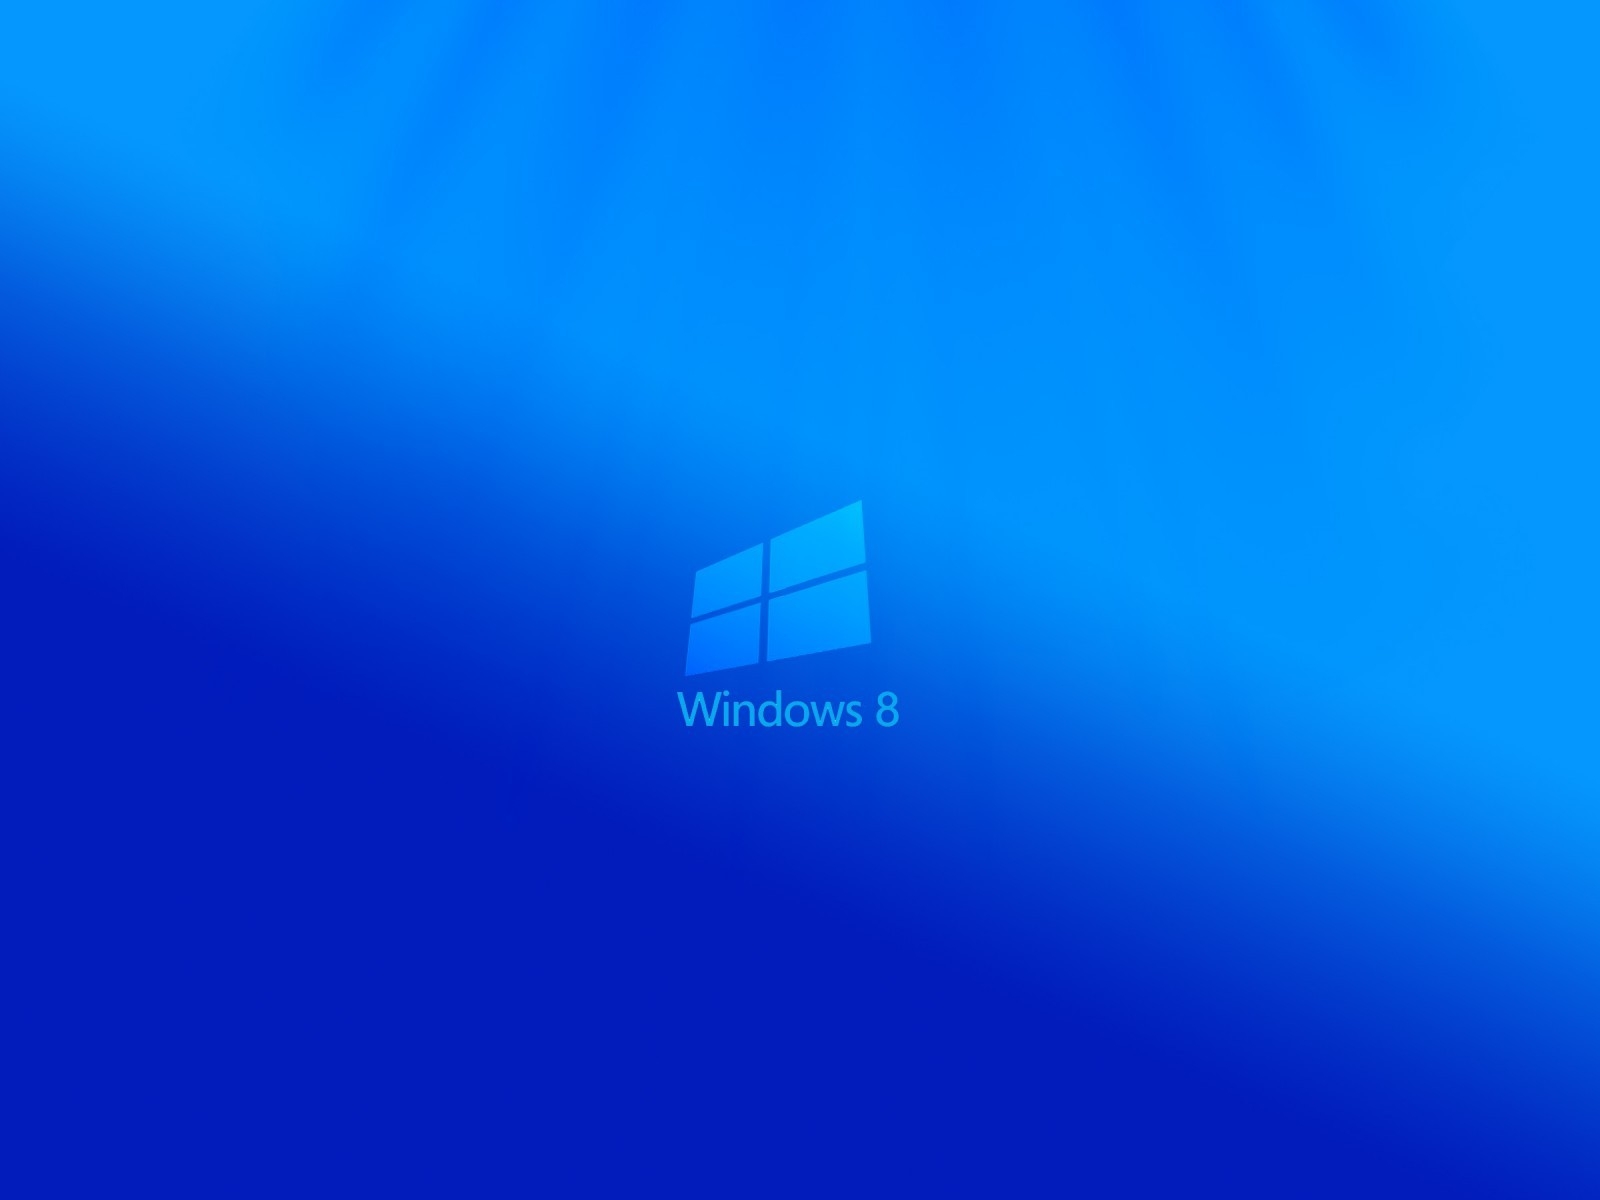 Windows 8 Light for 1600 x 1200 resolution